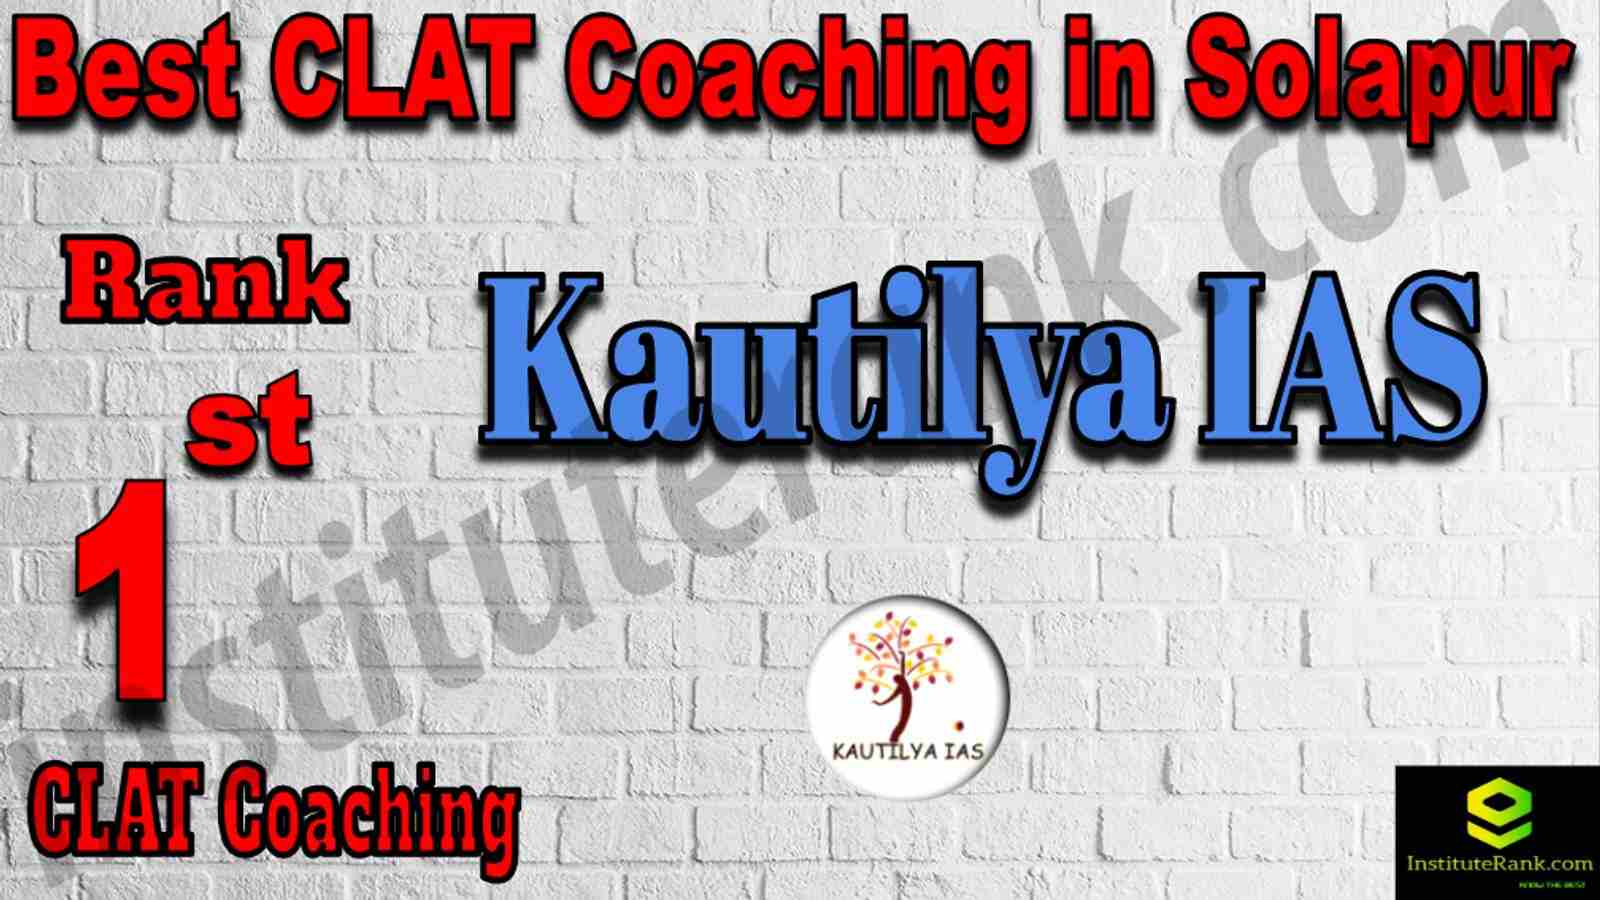 1st Best Clat Coaching in Solapur